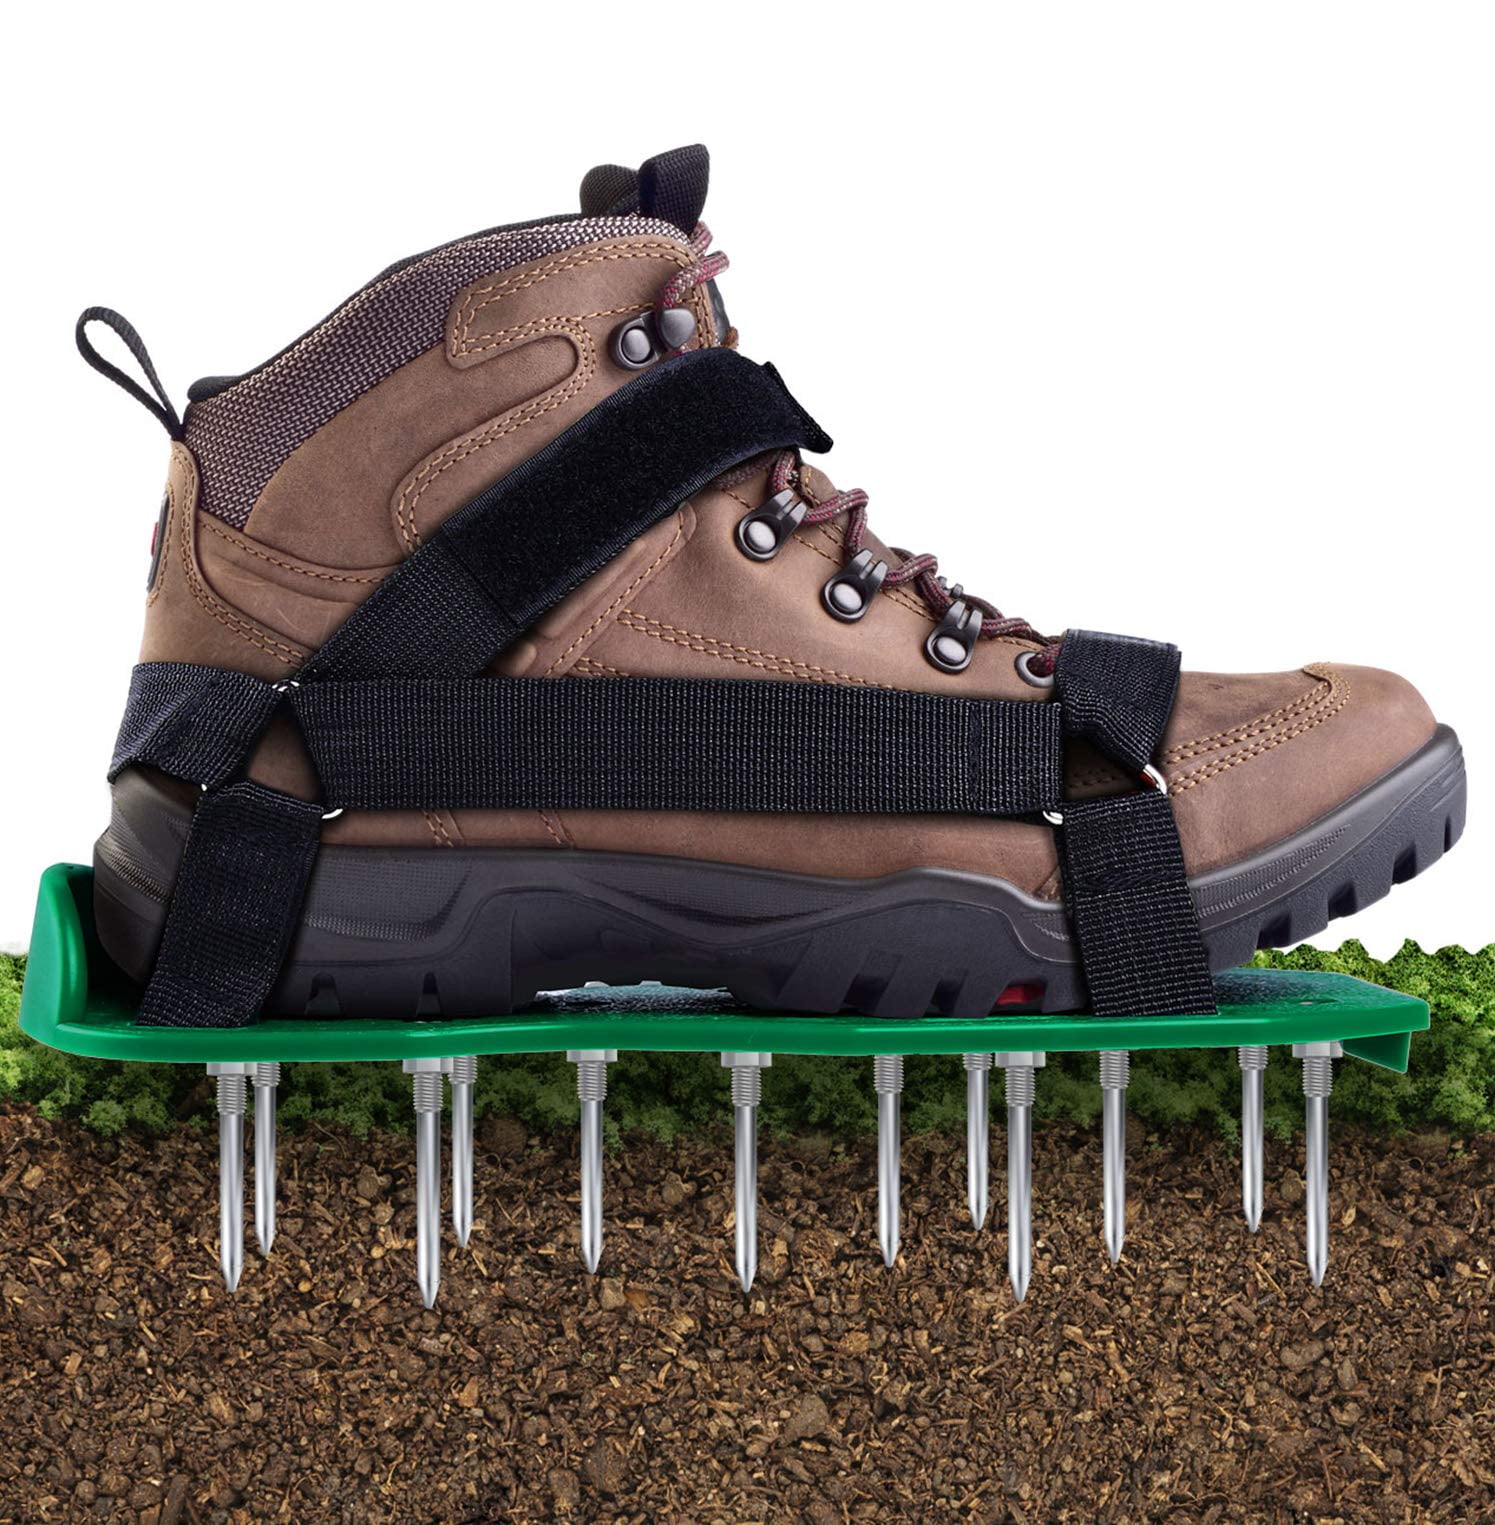 3 Straps/4 Straps Lawn Aerator Shoes 3 straps Gardening Tool lawn garden for grass etc patio